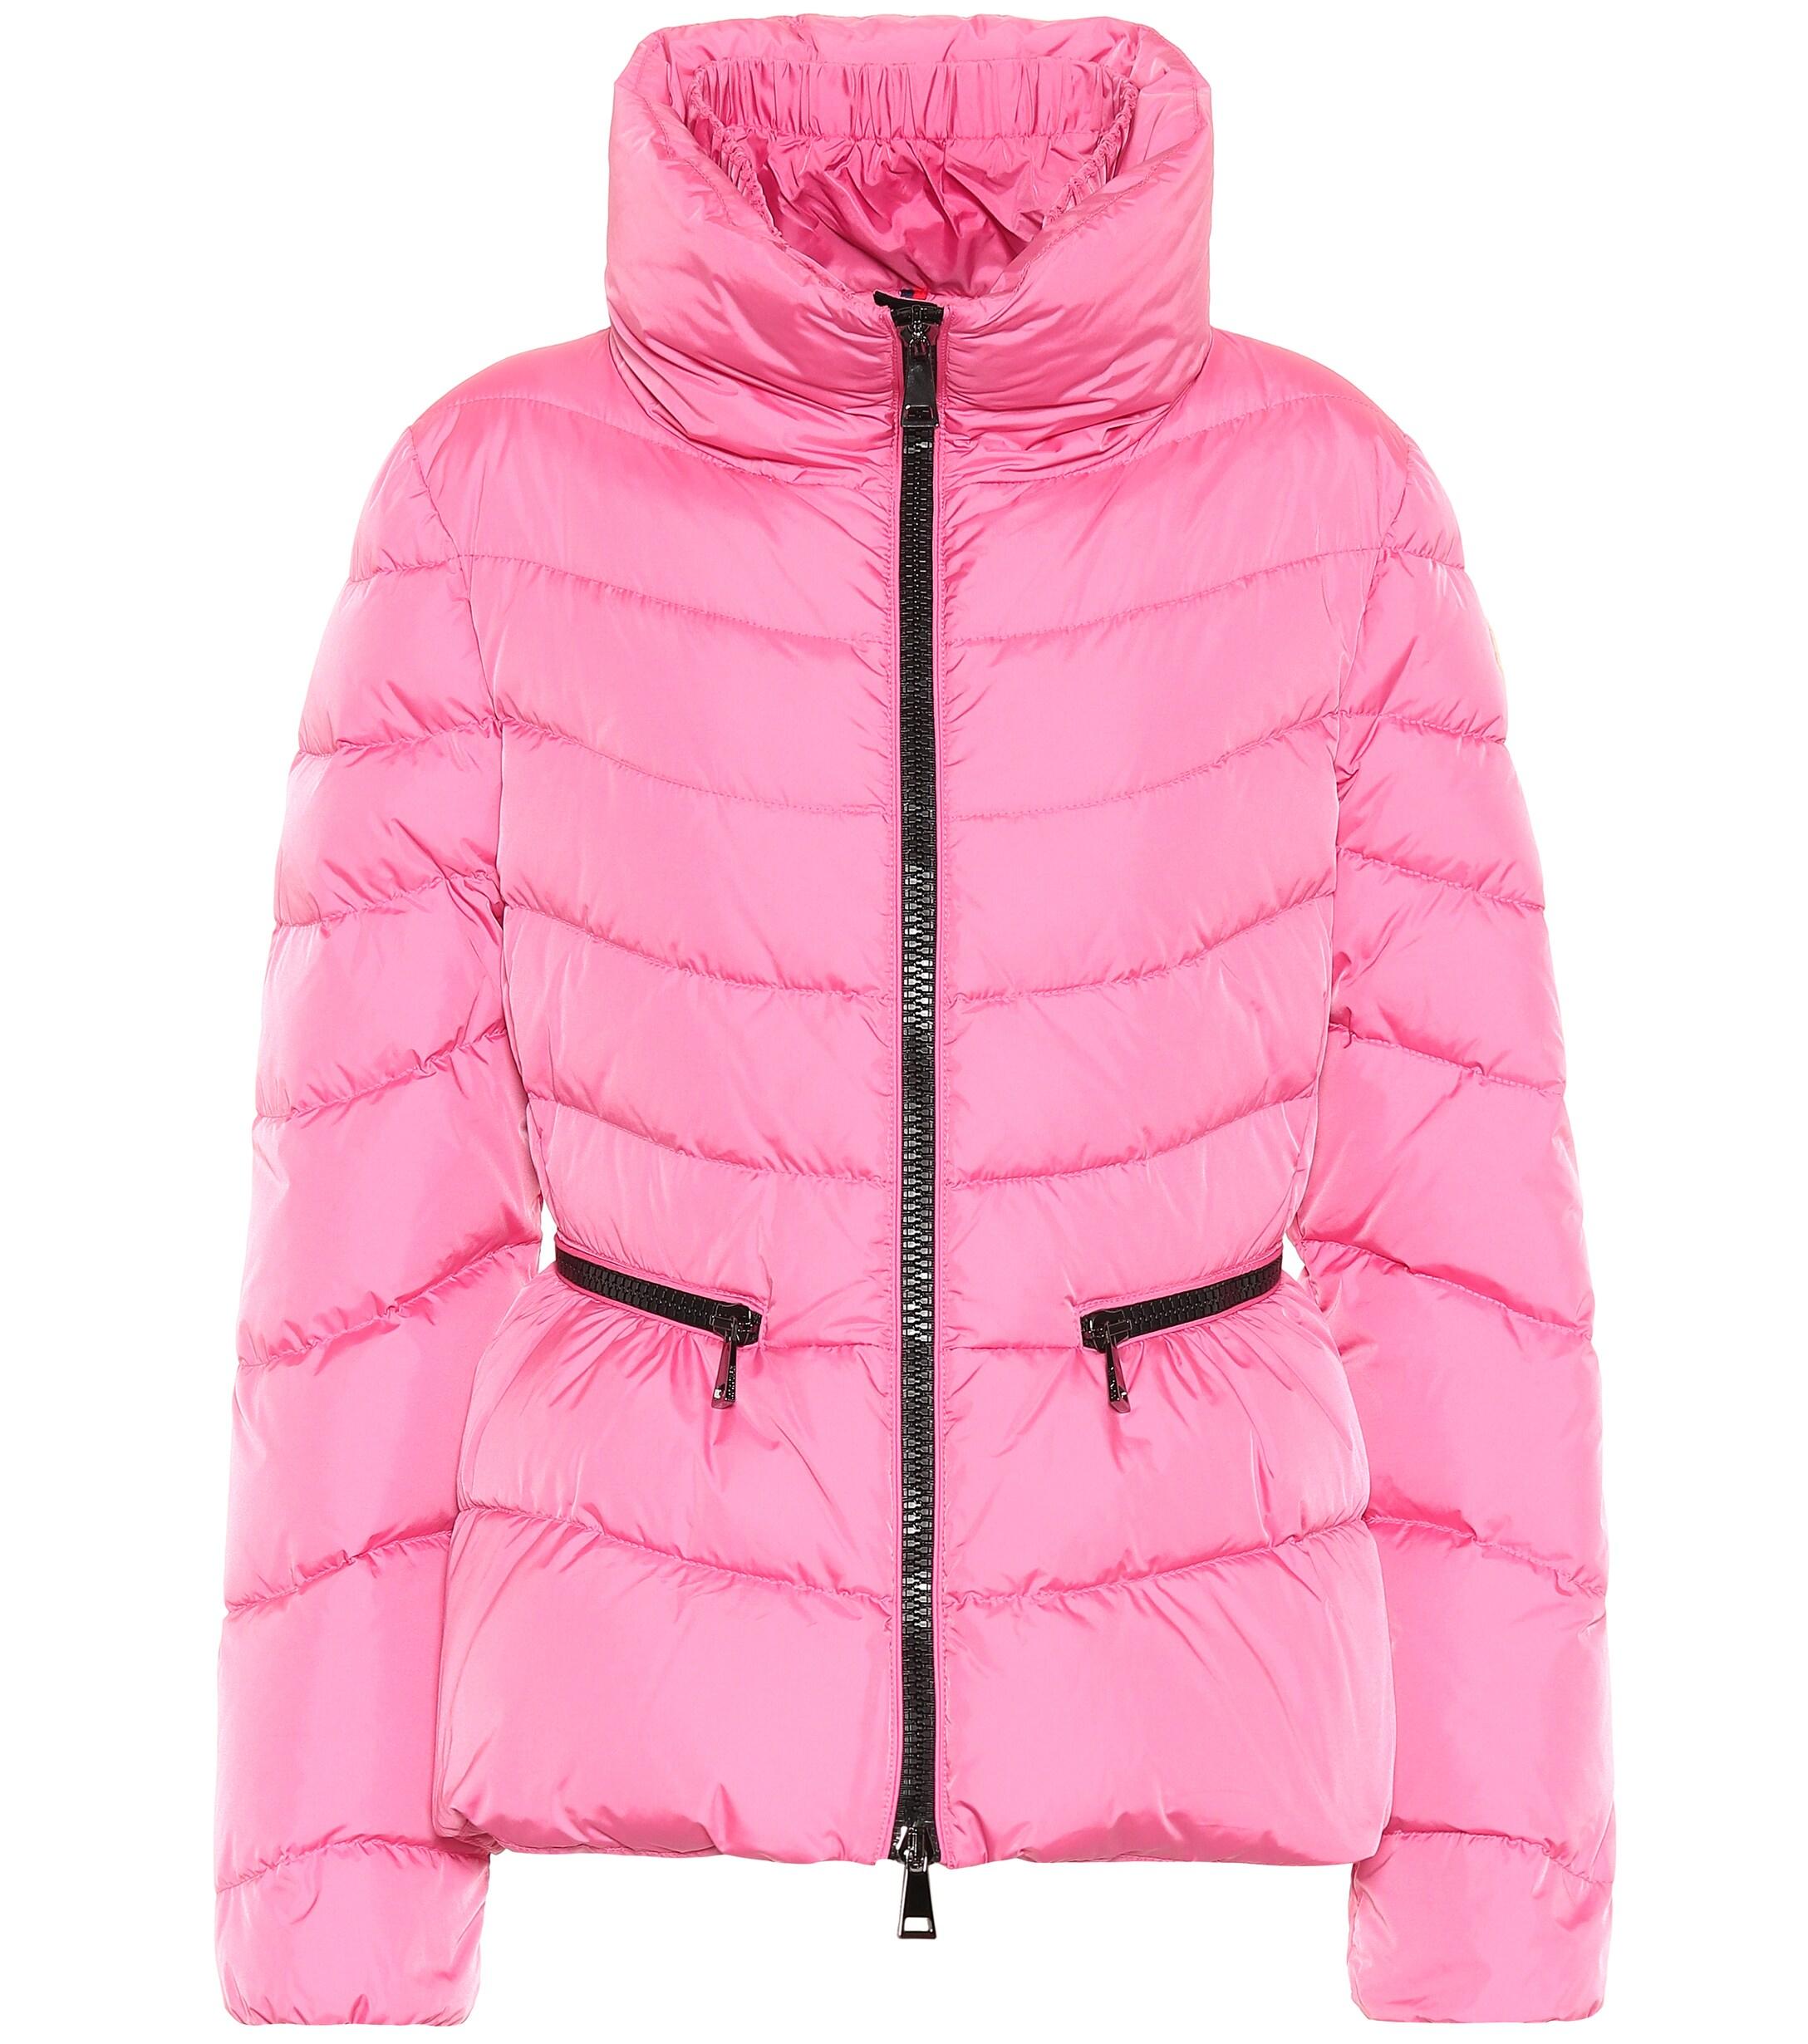 Moncler Miriel Down Jacket in Pink - Lyst